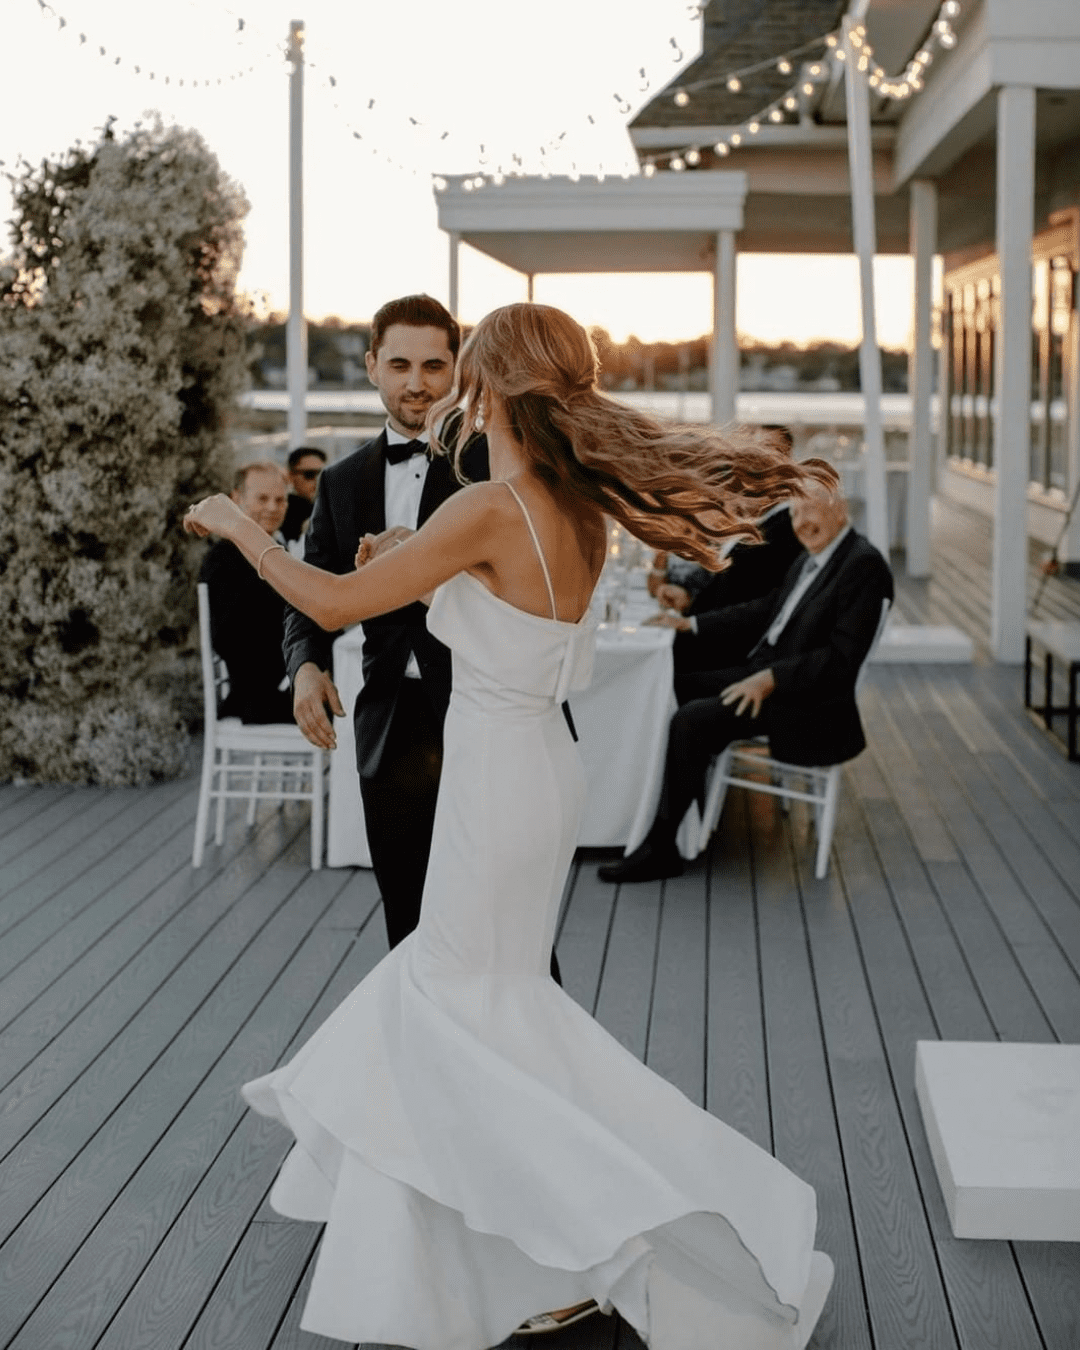 best wedding venues in new england bride and groom dancing